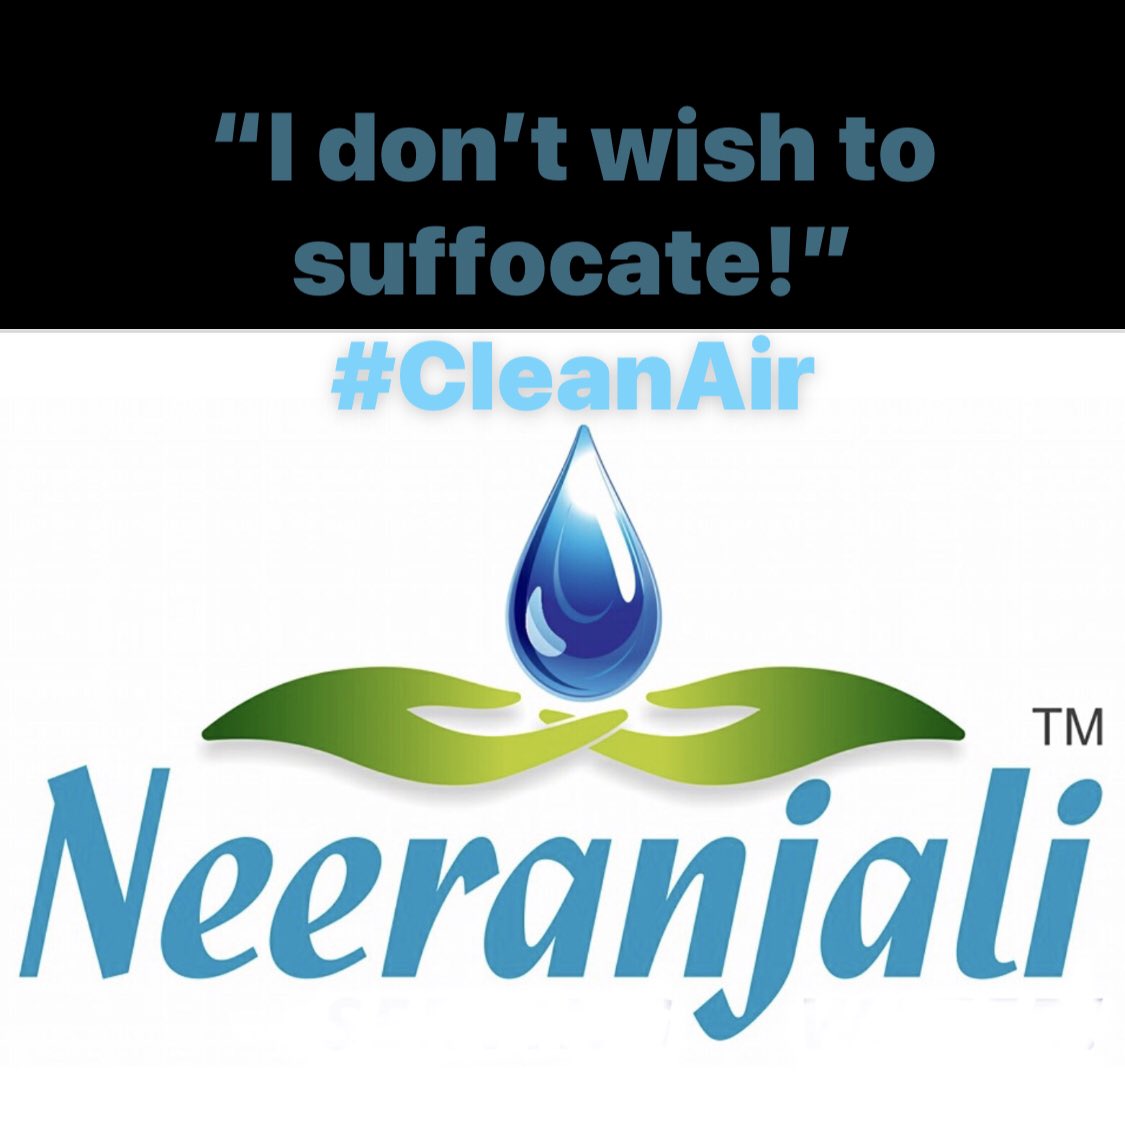 #CleanerEnvironment #HealthyYou
#NEERANJALI